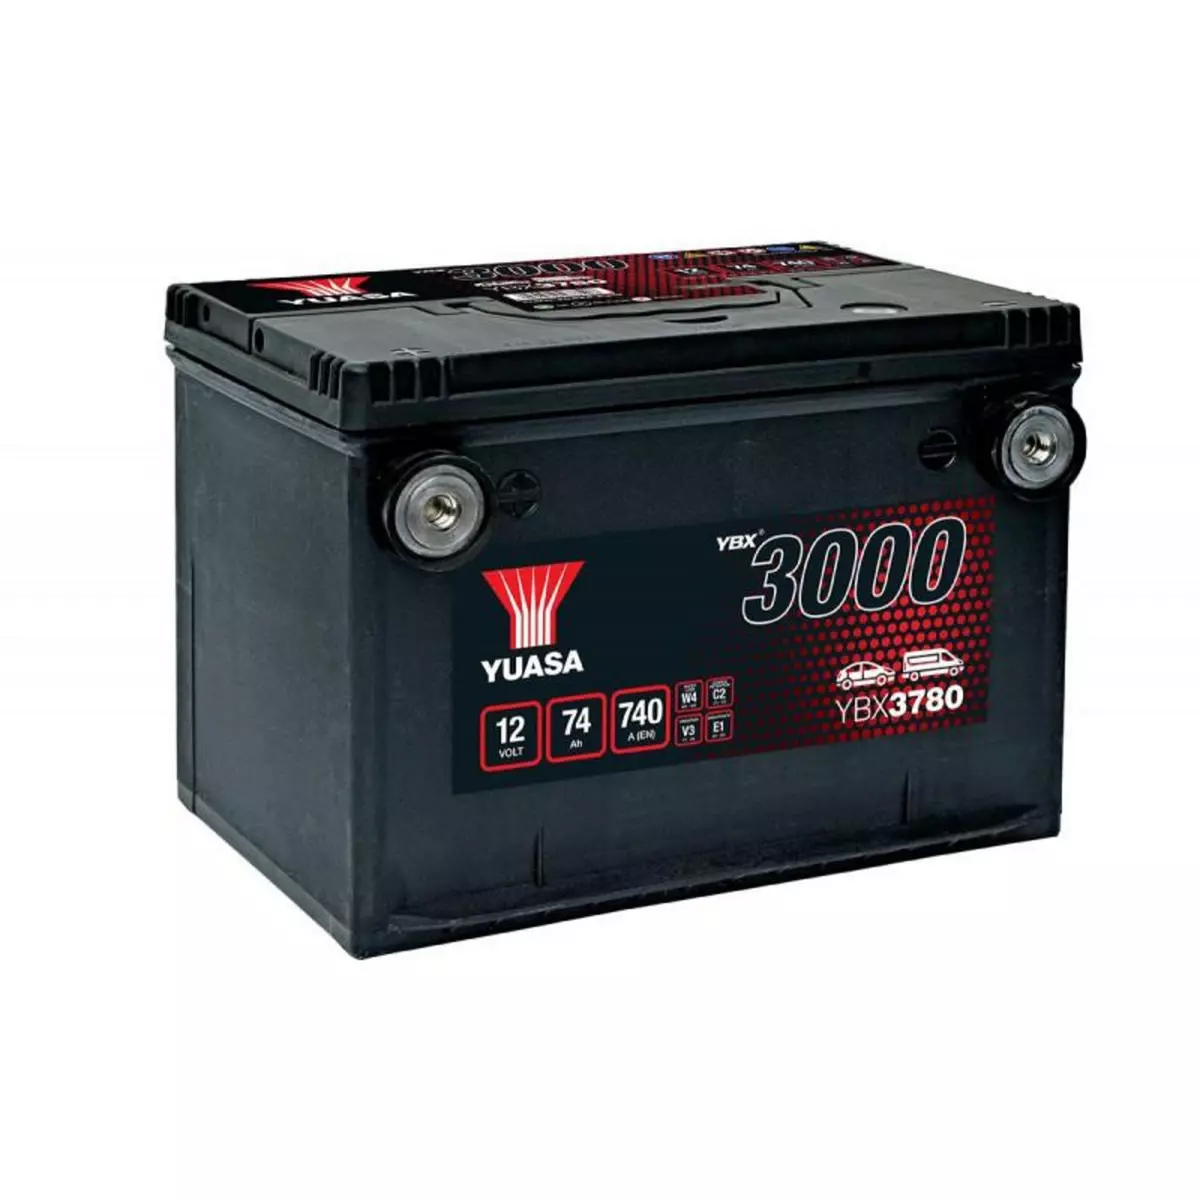 YUASA Batterie voiture américaine Yuasa SMF YBX3780 12V 74ah 740A